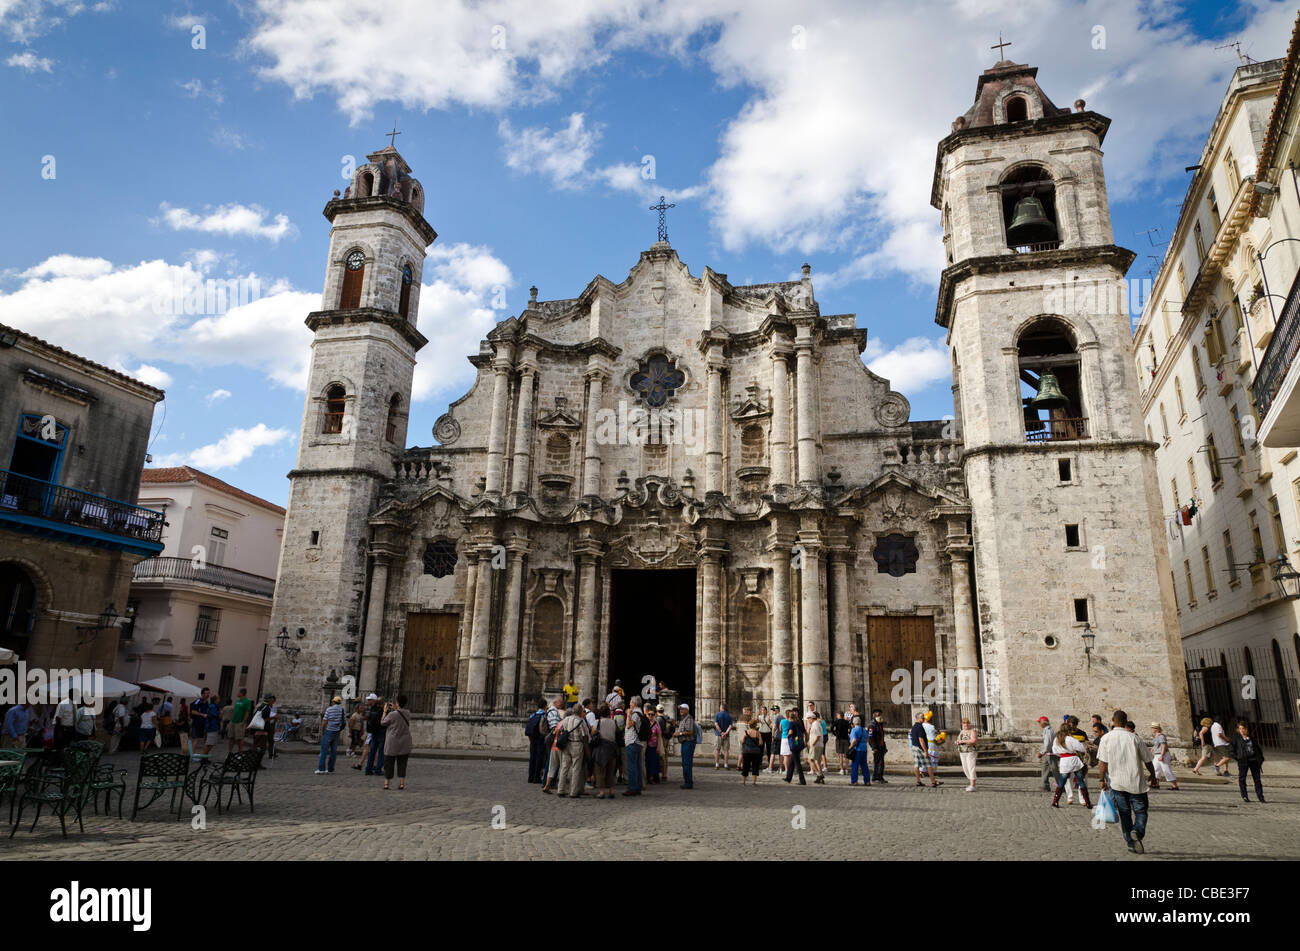 Catedral de San Cristobal in Plaza de la Catedral La Habana Vieja Havana Cuba Stock Photo